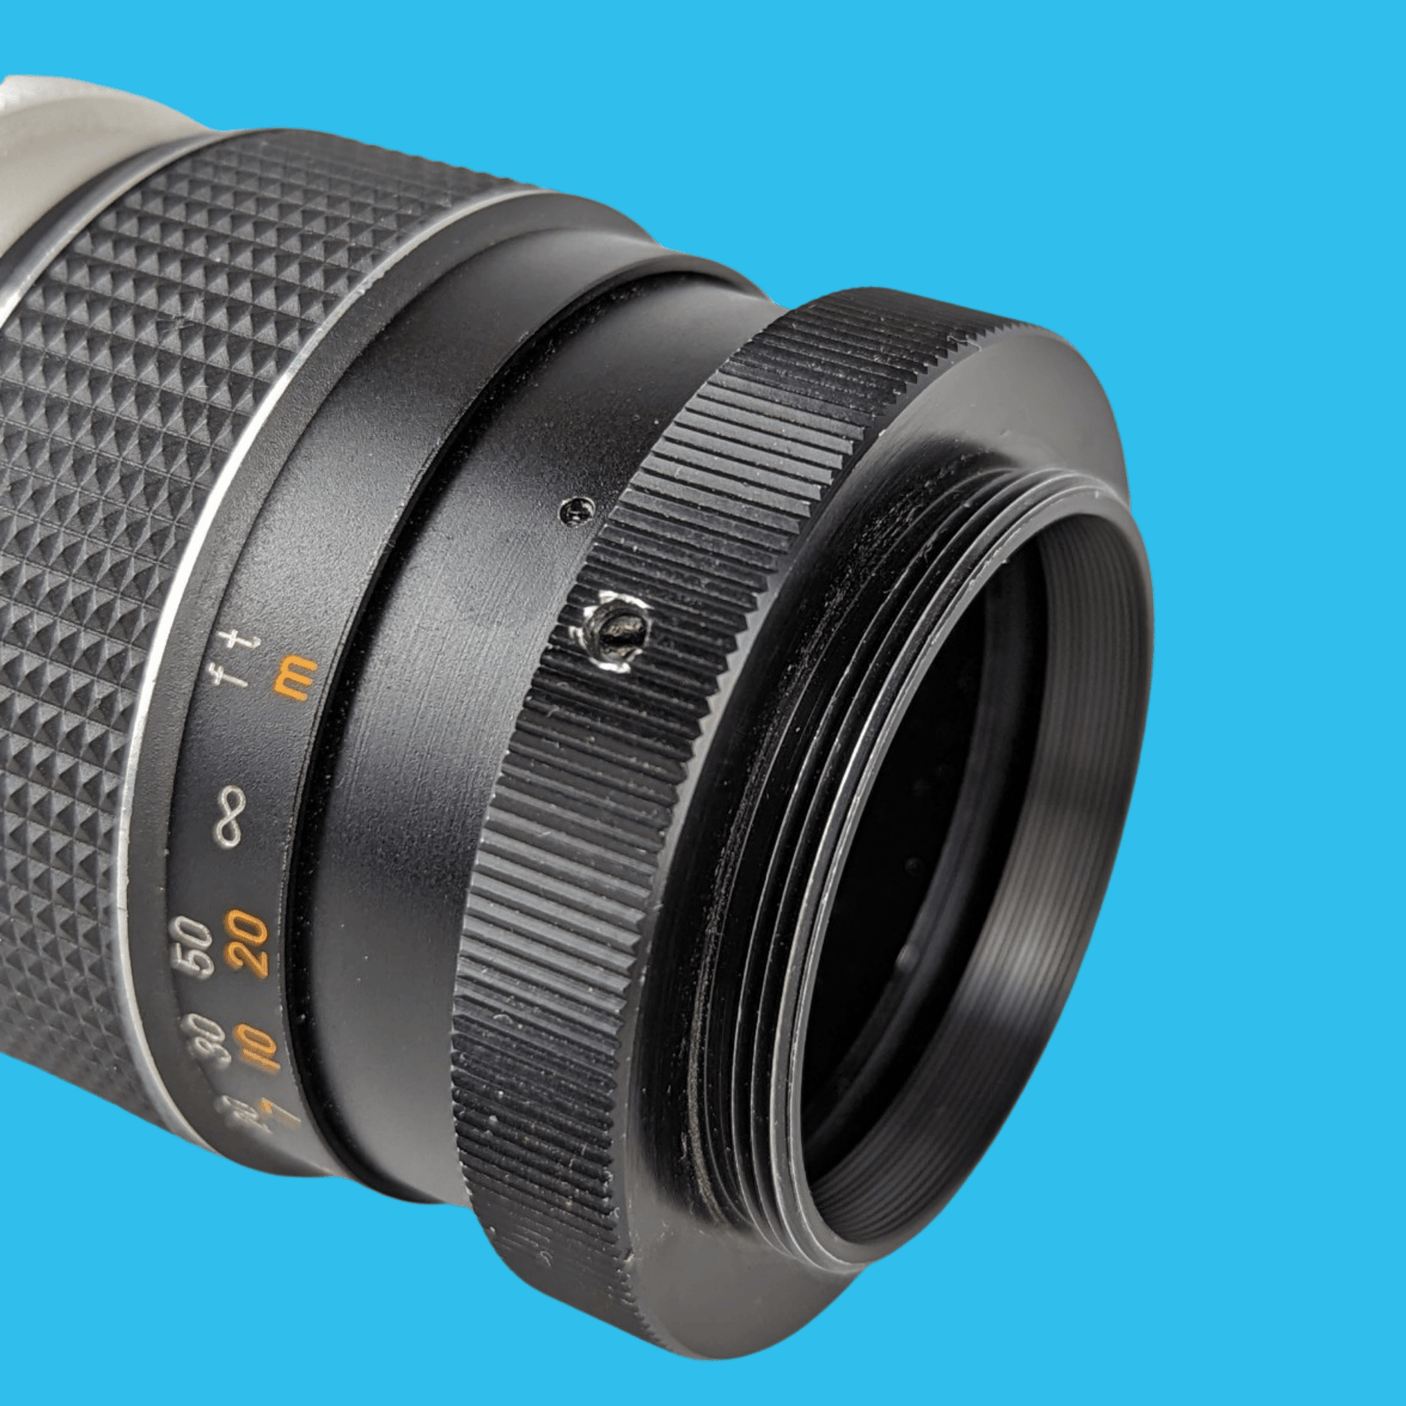 Optomax 135mm f/3.5 Camera Lens